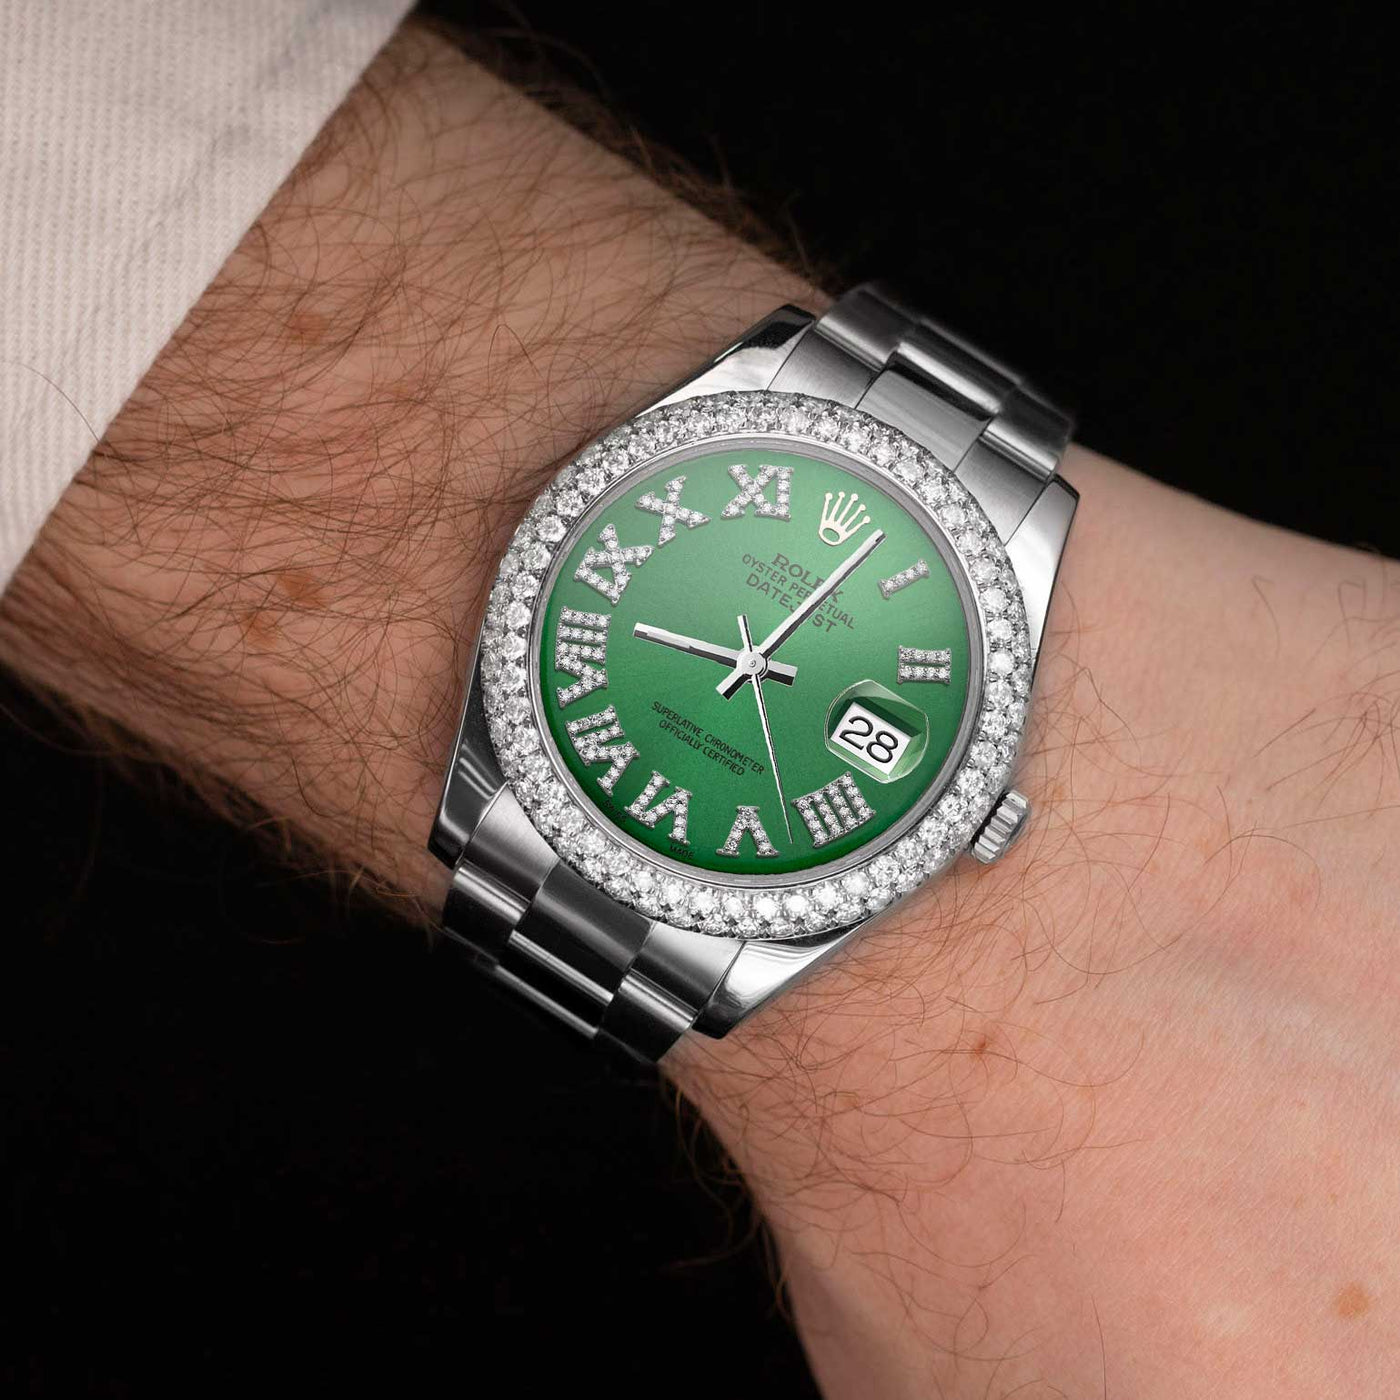 Rolex Datejust Diamond Bezel Watch 41mm Green Roman Numeral Dial | 5.25ct